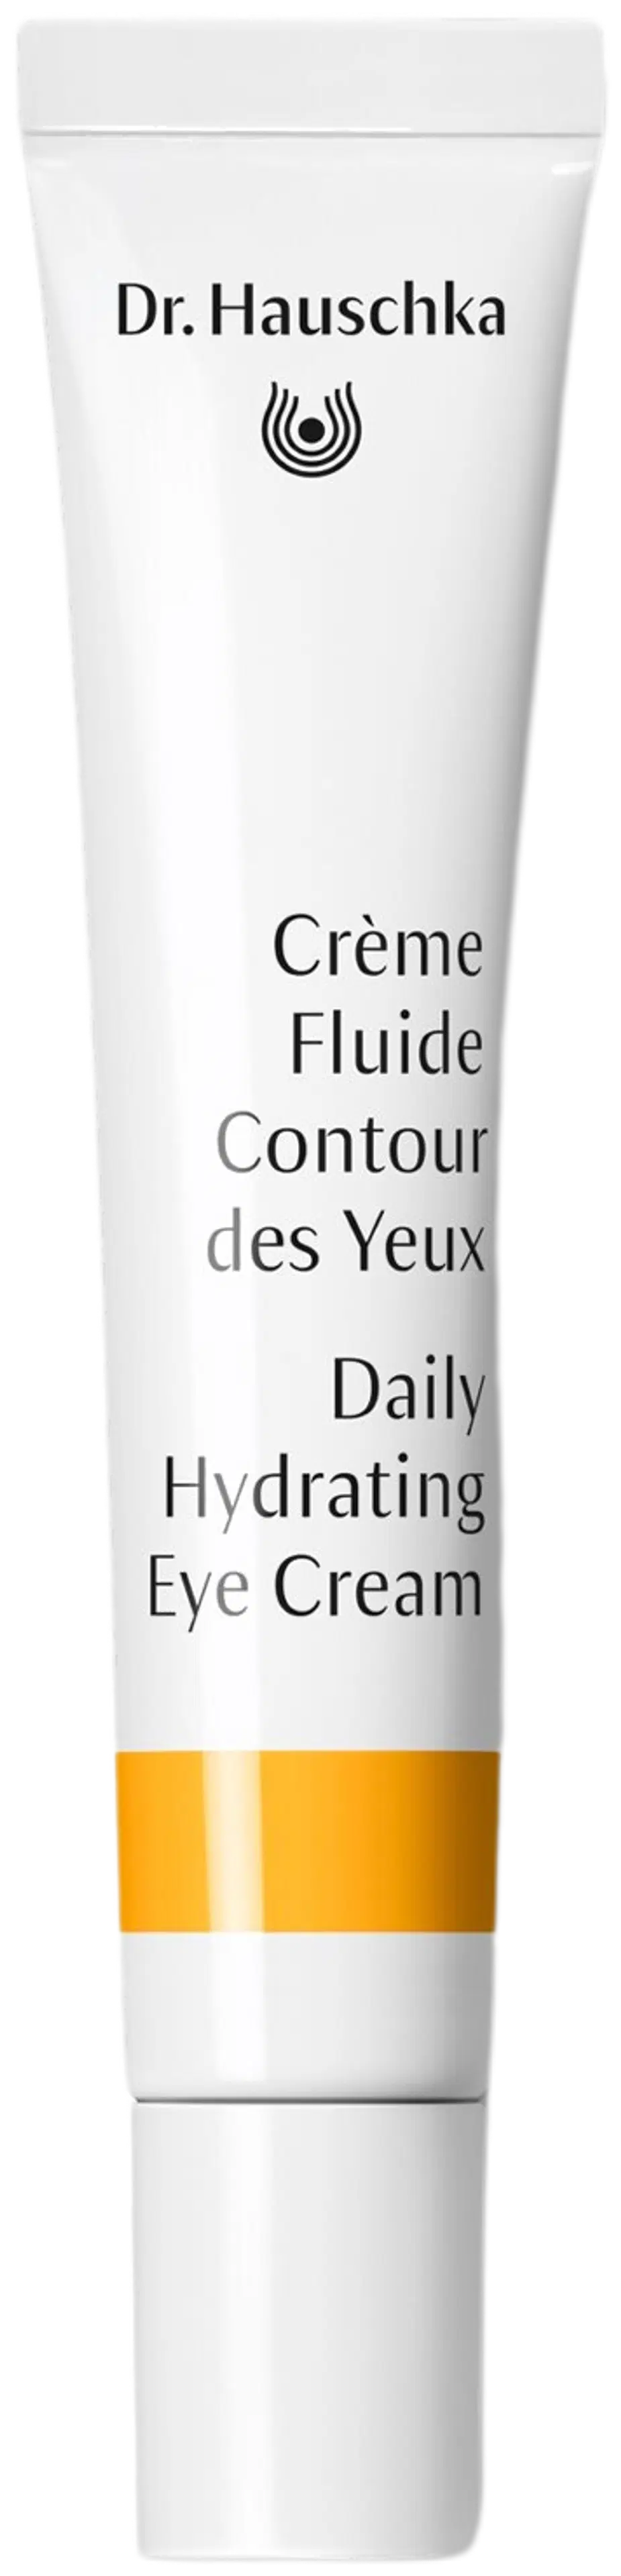 Dr. Hauschka Daily Hydrating Eye Cream silmänympärysvoide 12,5 ml